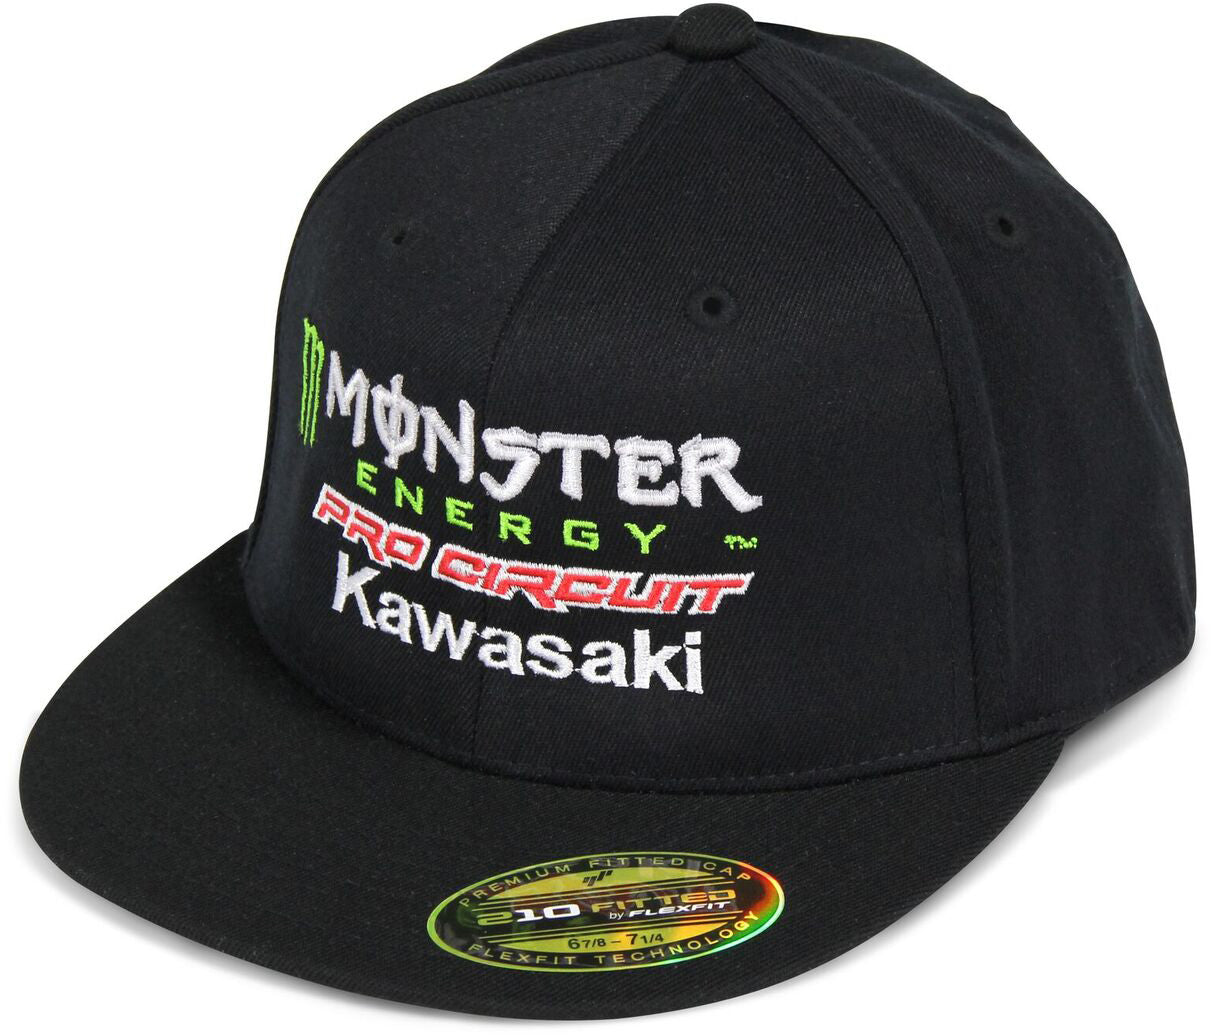 Black Team Snap-Back Hat with logo on front